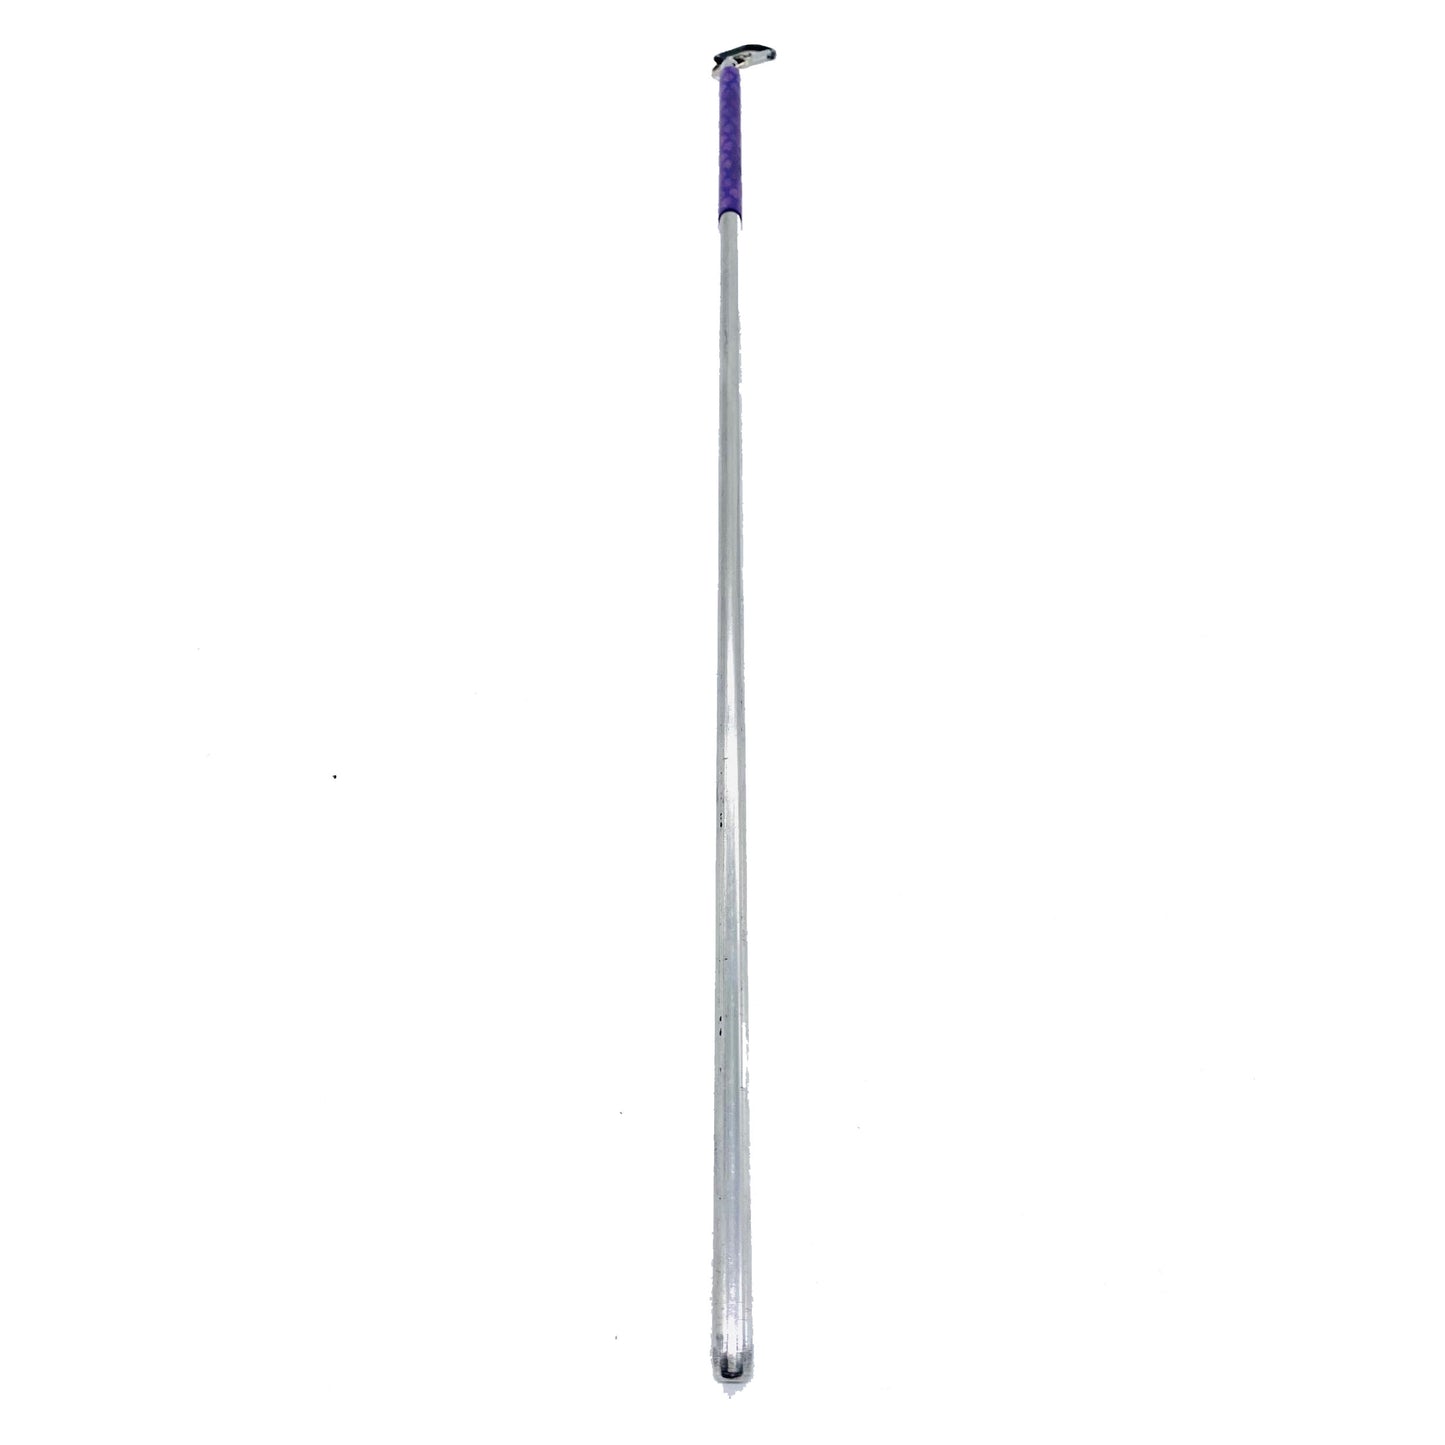 Aluminum Cane, spanking cane, cane, bdsm, impact, punishment, discipline